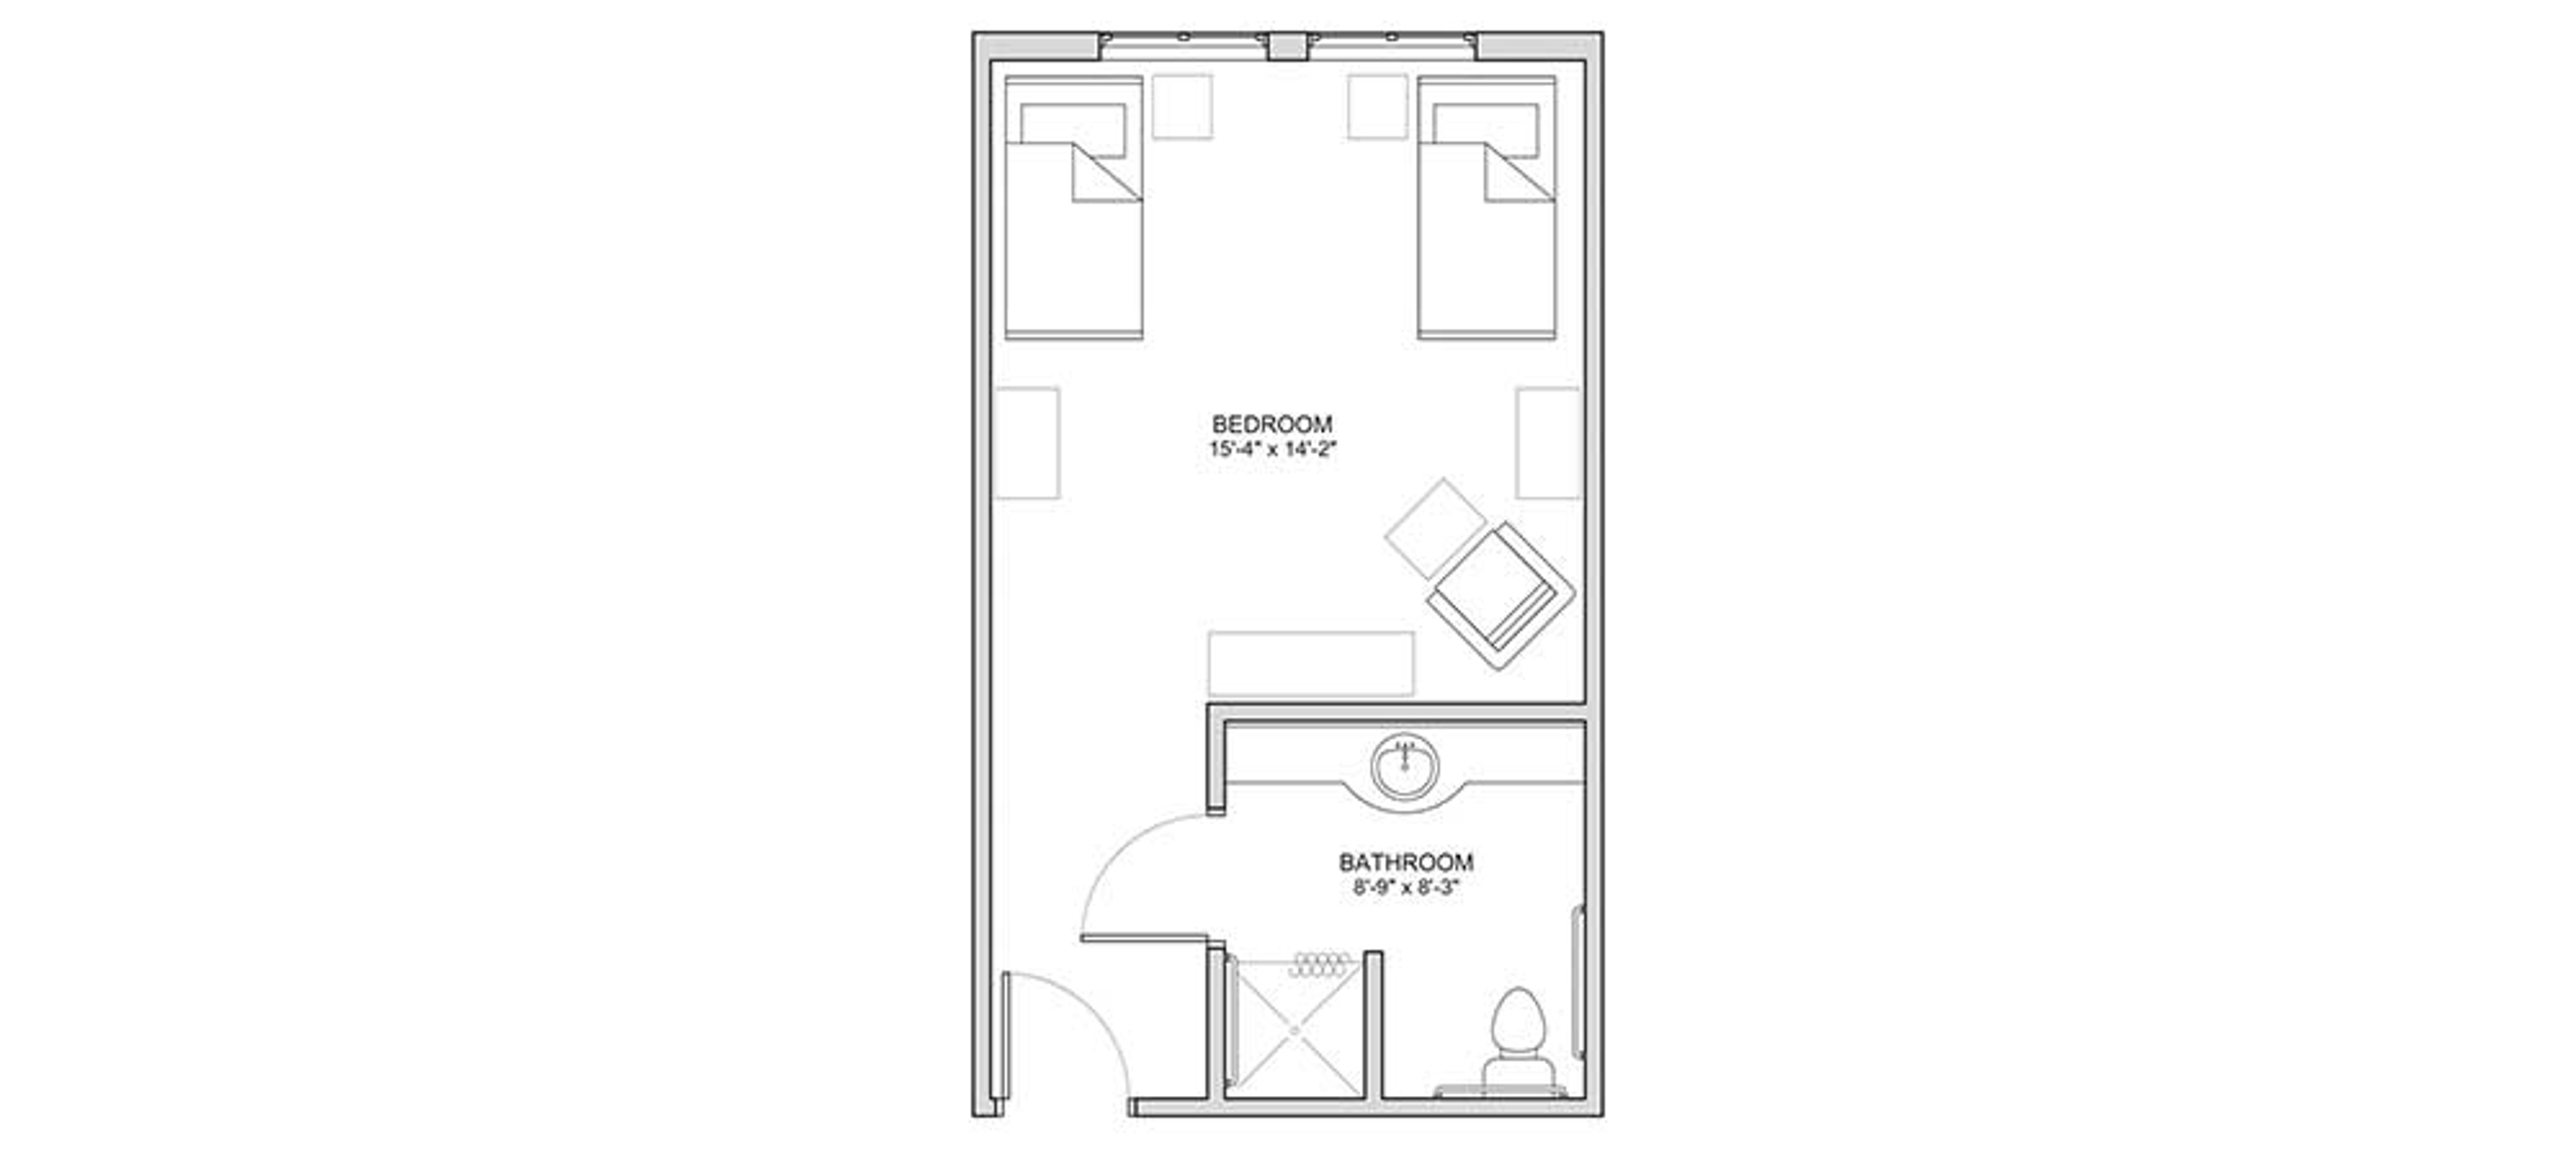 Floorplan - The Auberge at Sugar Land - 1 bed, 1 bath, Semi-private, Memory Care